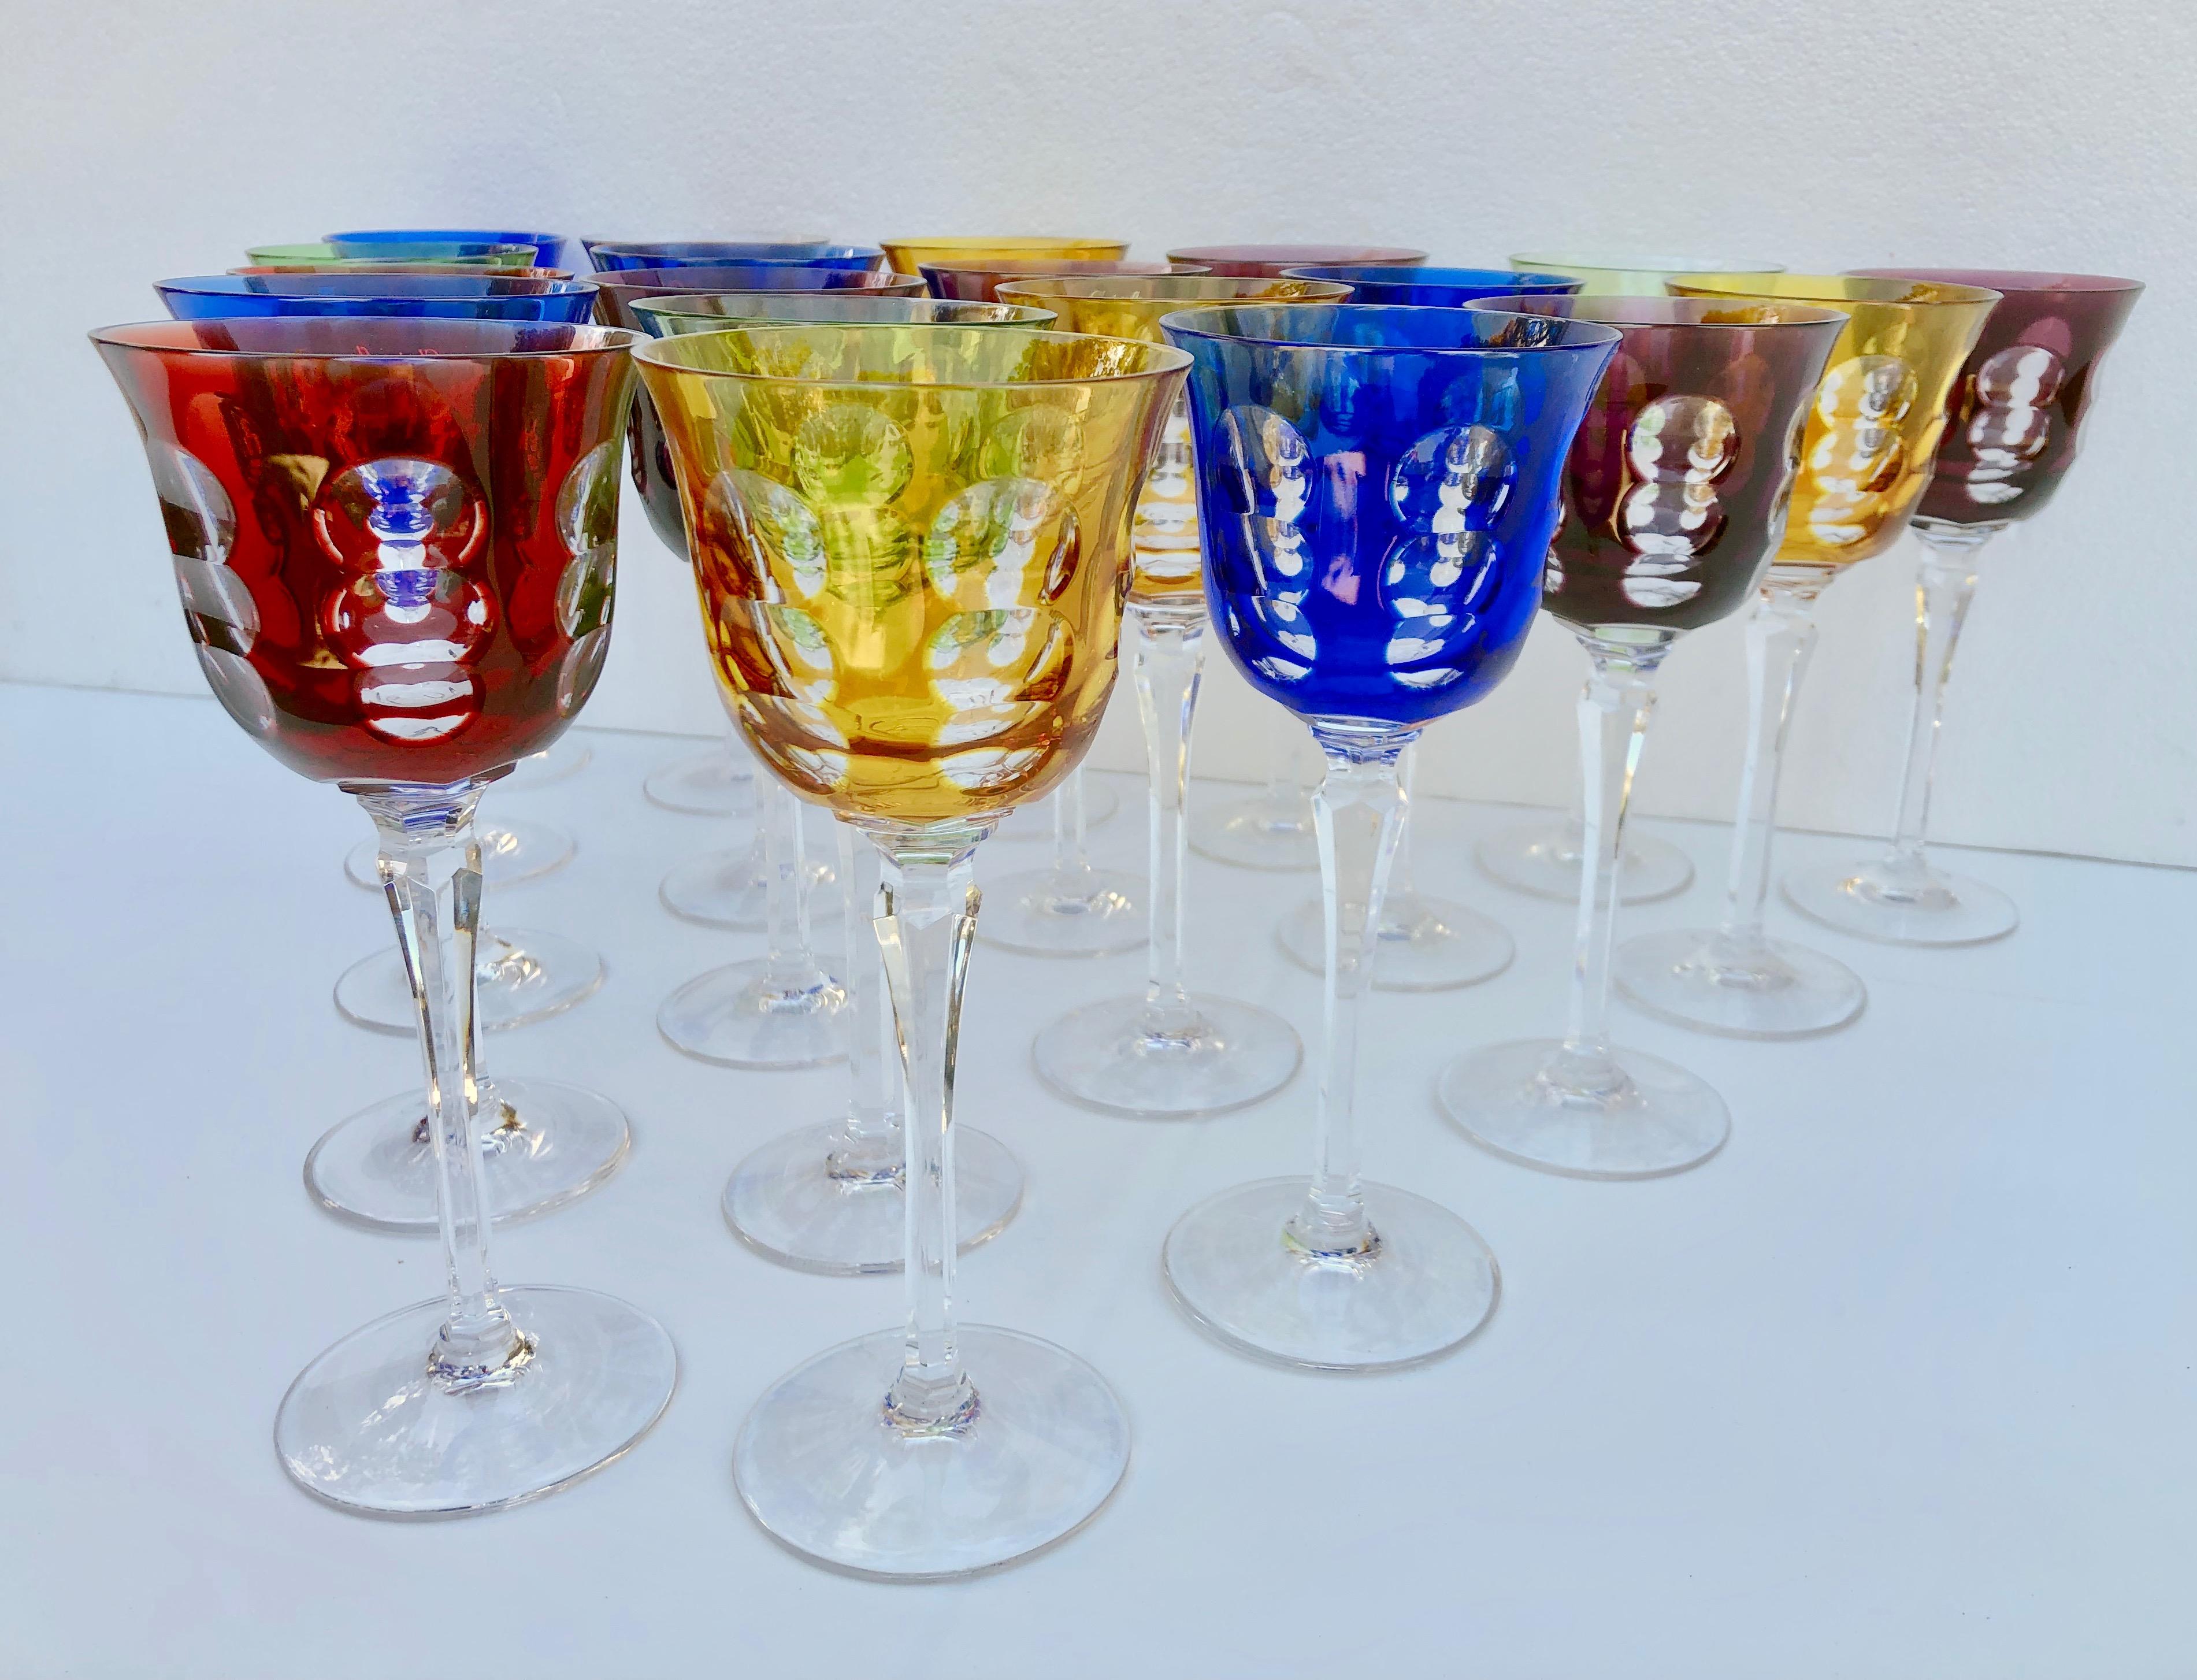 christofle wine glasses